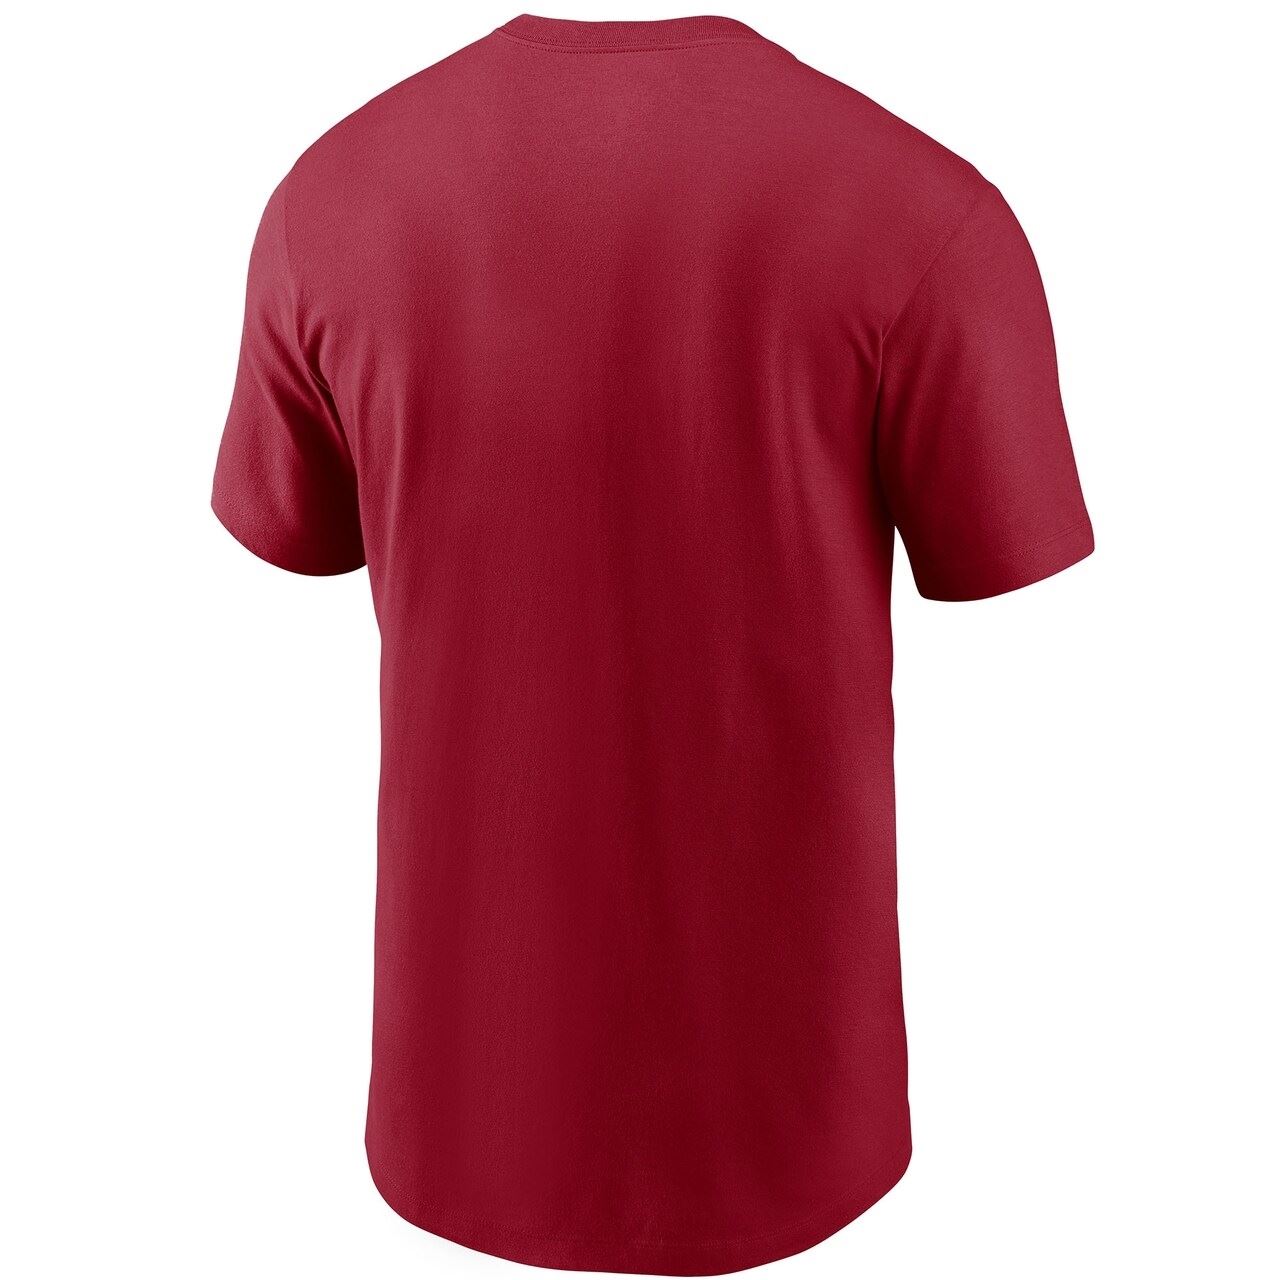 Atlanta Falcons NFL Split Team Name Essential Tee Gym Red T-Shirt Nike